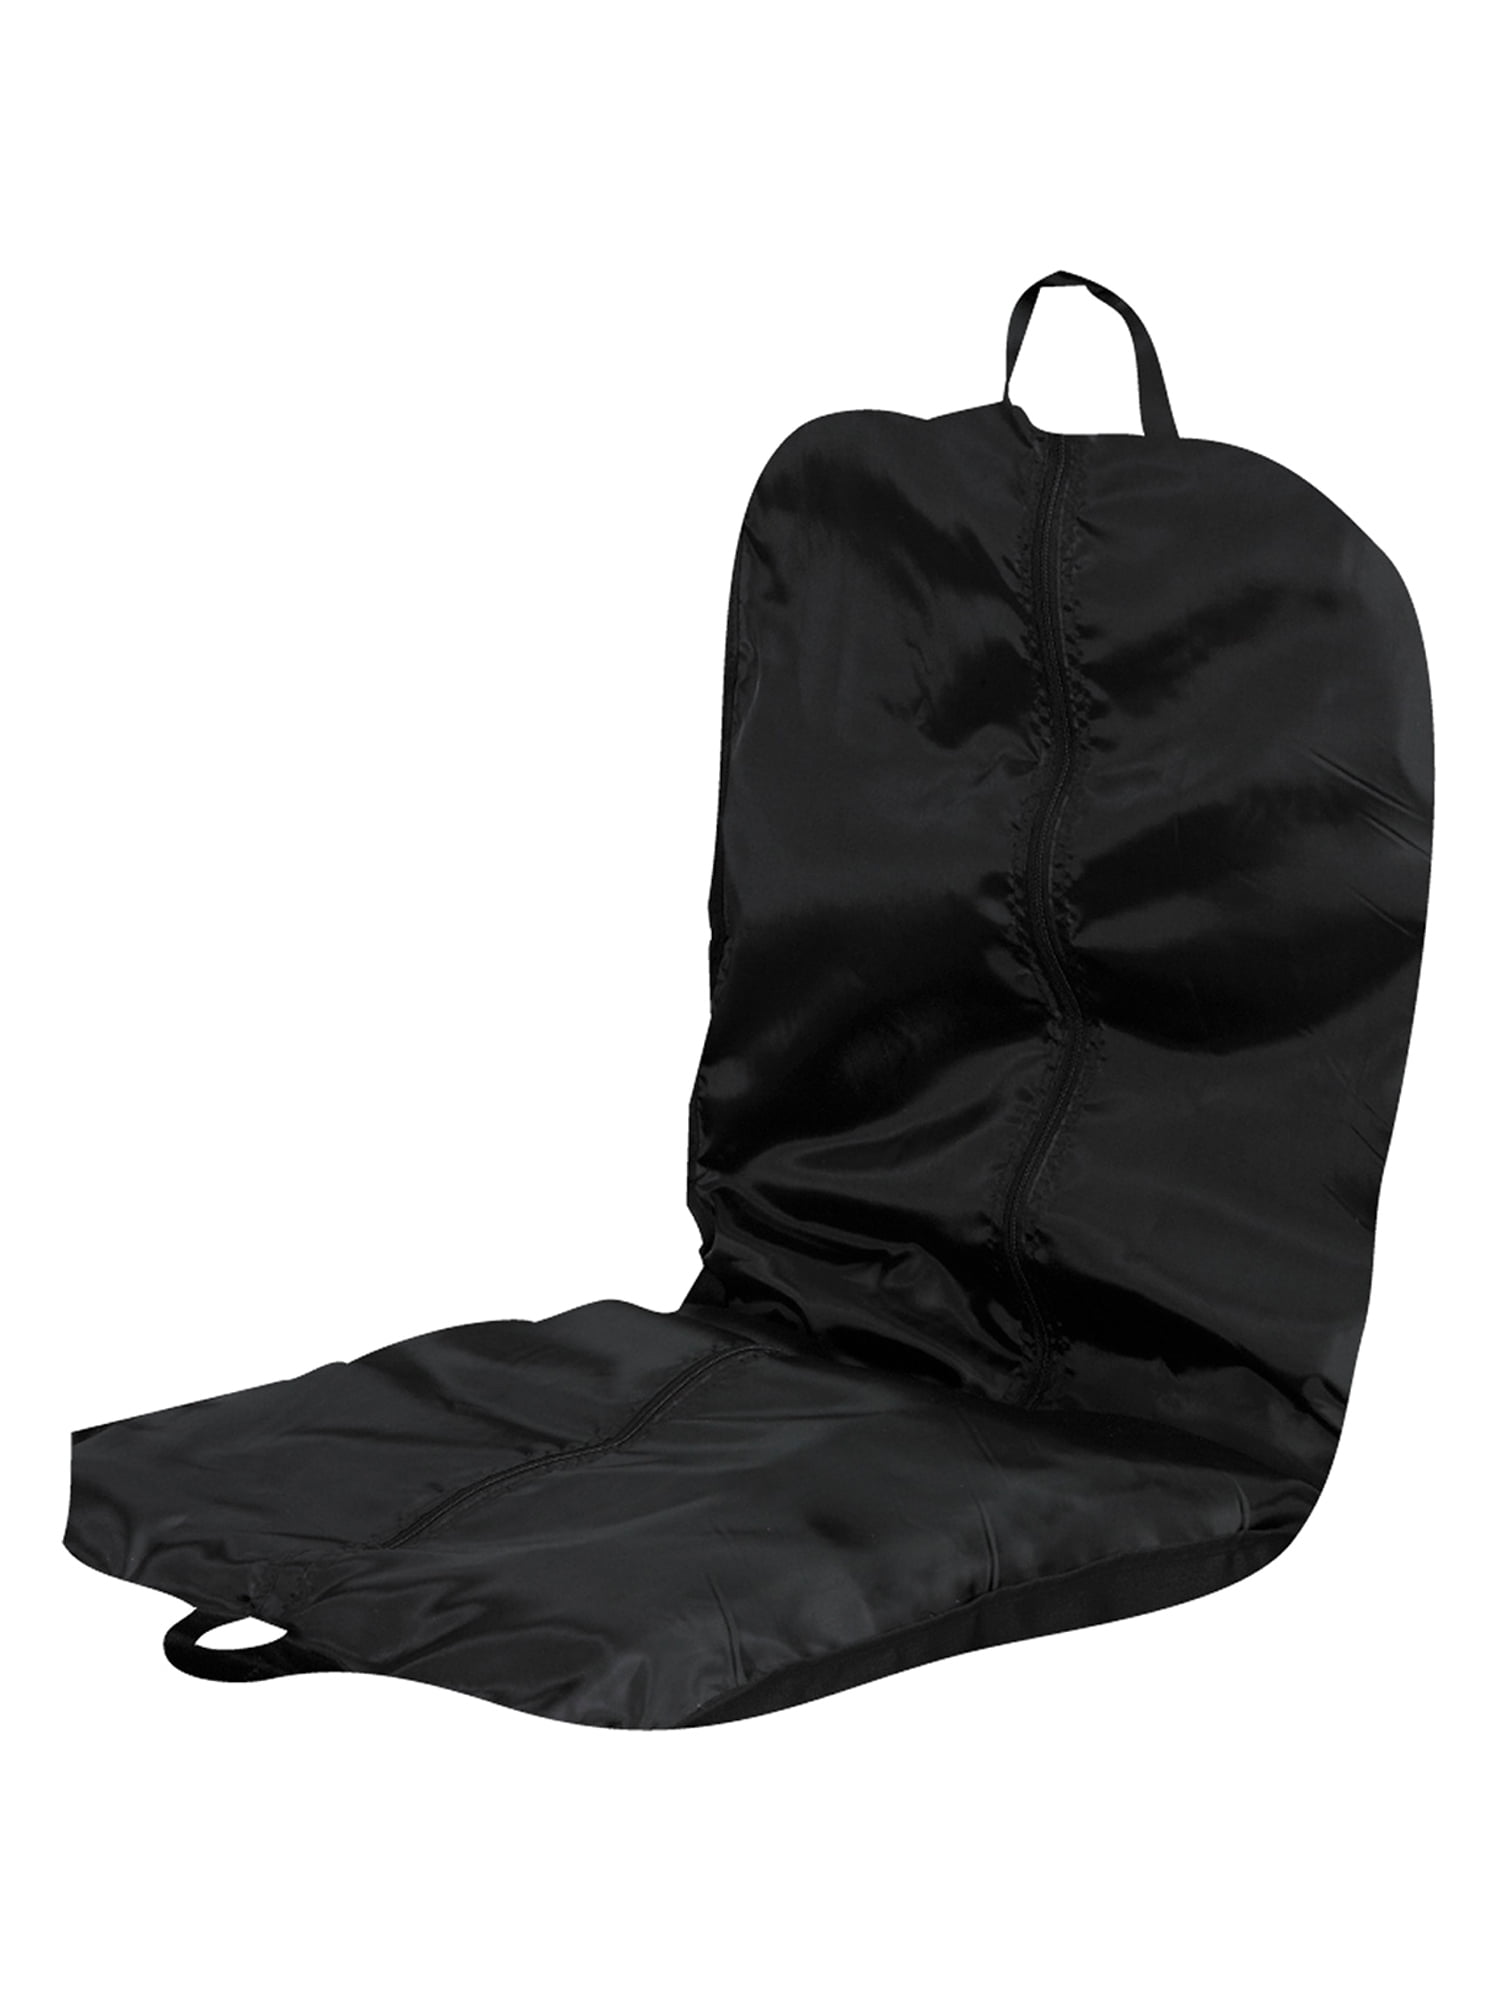 2 x SET OF BLACK GARMENT SUIT COVERS CLOTHES DRESS COAT BAG PROTECTOR TRAVEL 